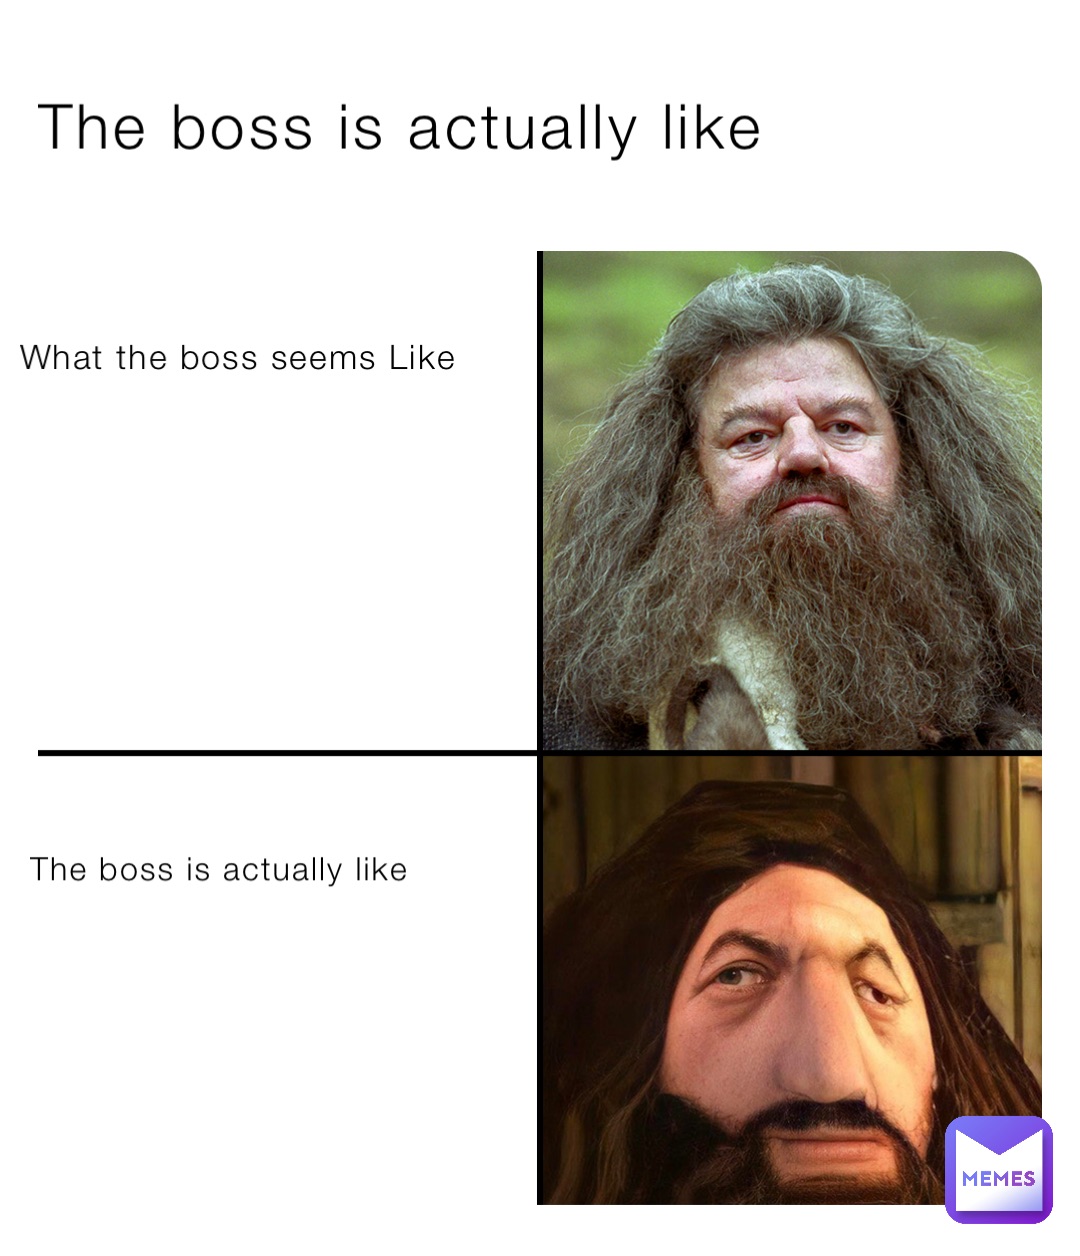 bosses be like